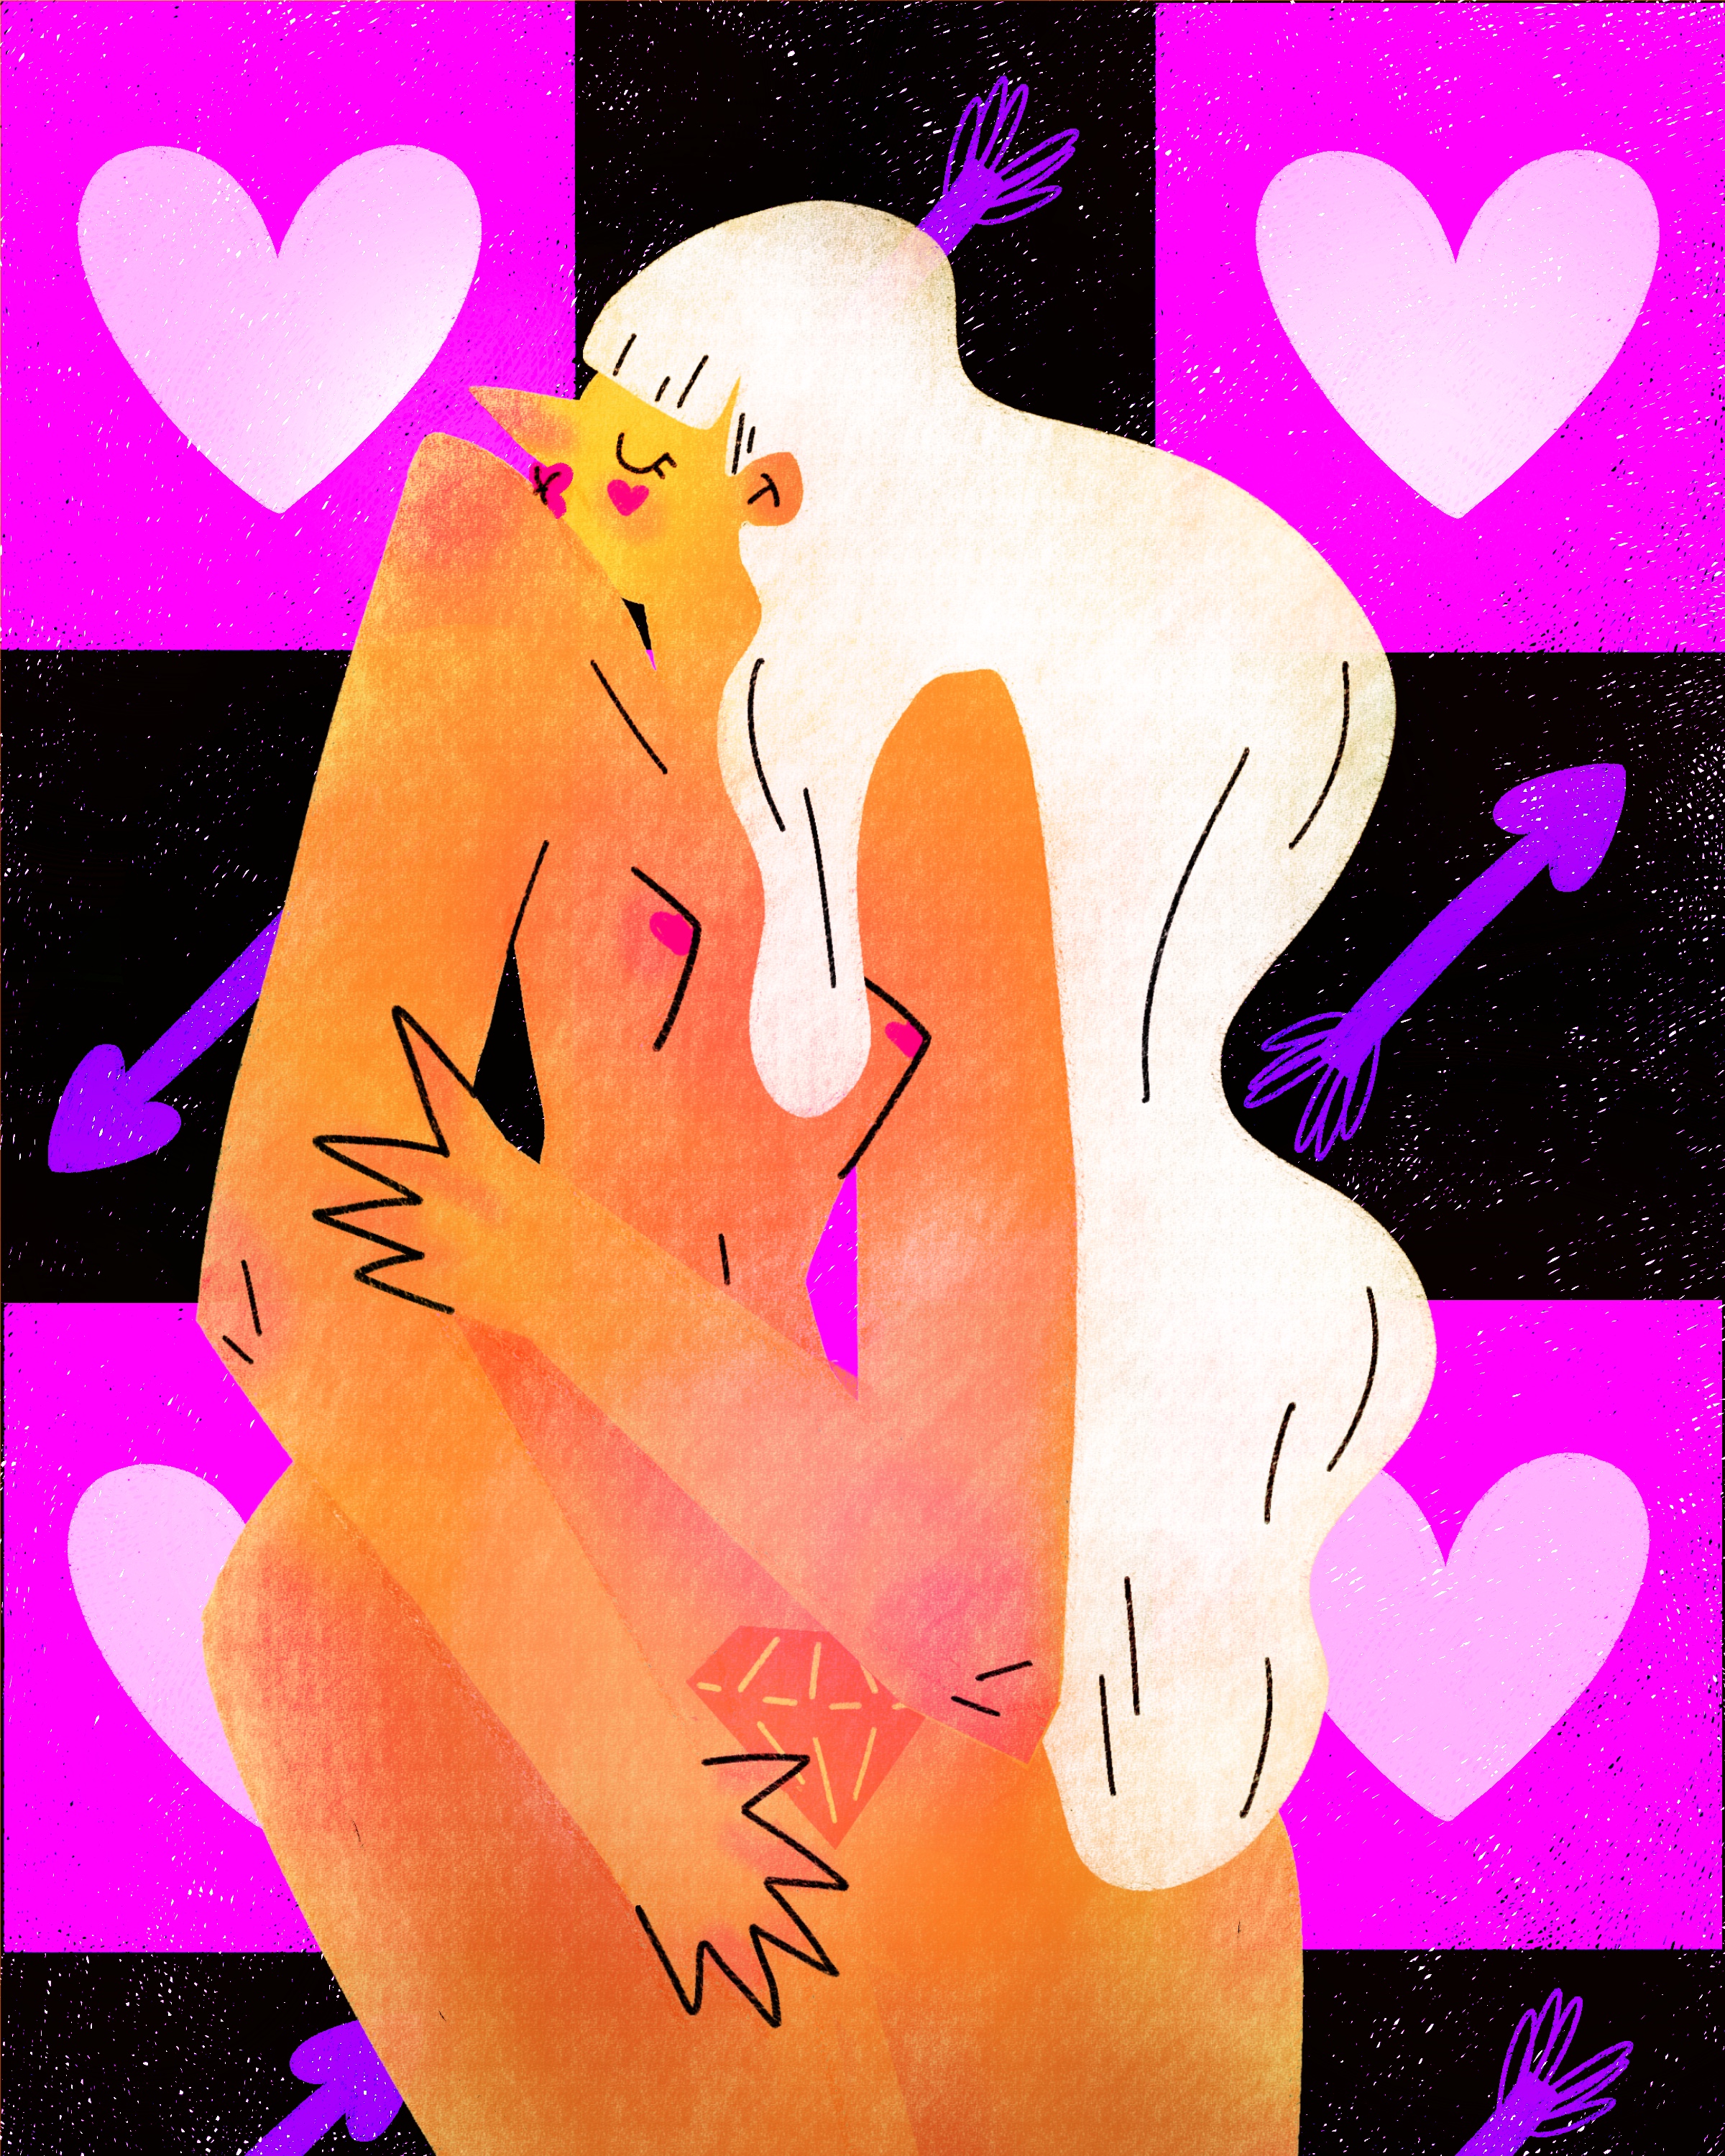 Illustration artworks of women kissing their own bodies